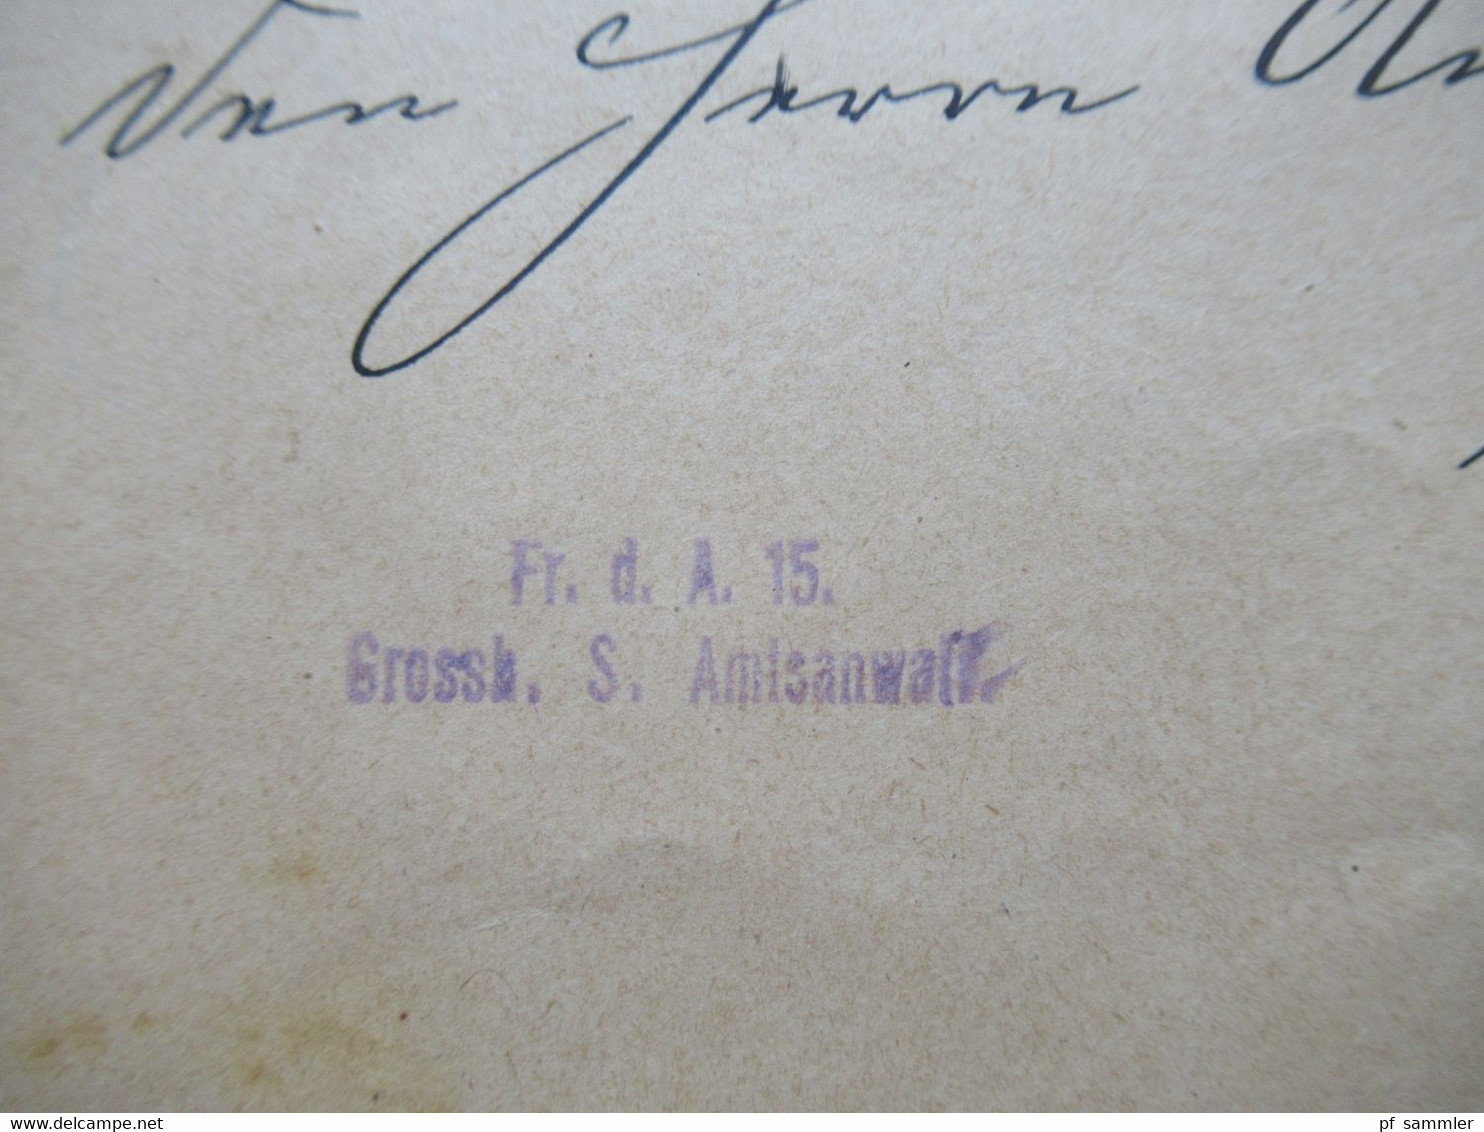 DR Dienst 1909 Stempel Frei D. A. Avers No 15 Grossh. S. Amtsanwalt Und Papiersiegel Grossh. S. Amtsanwalt Apolda - Dienstzegels